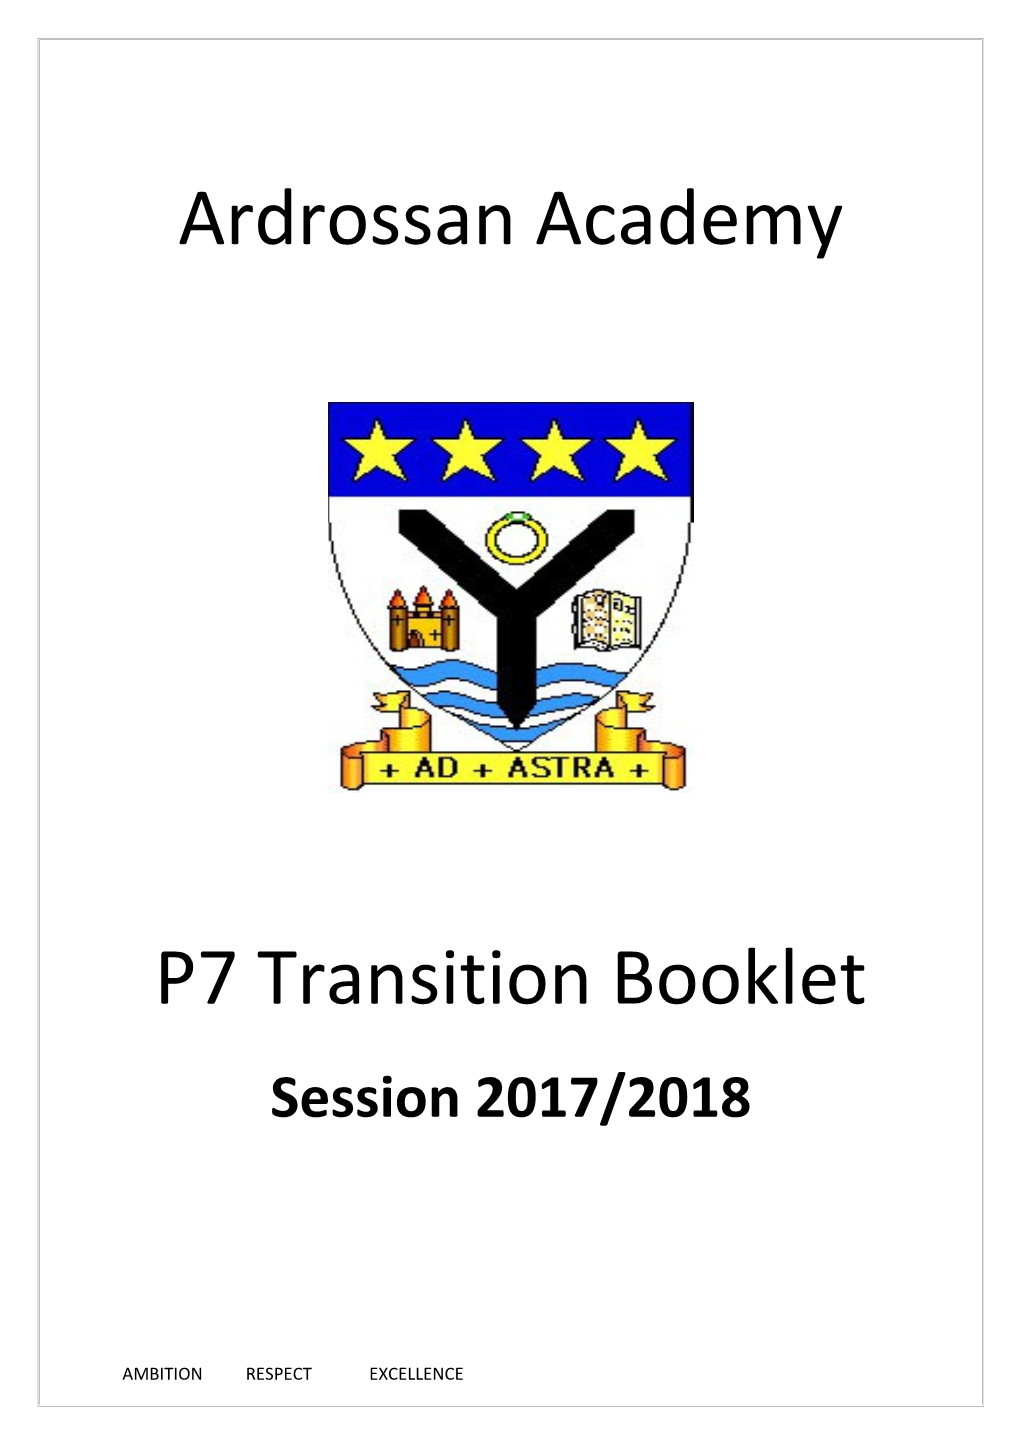 Ardrossan Academy